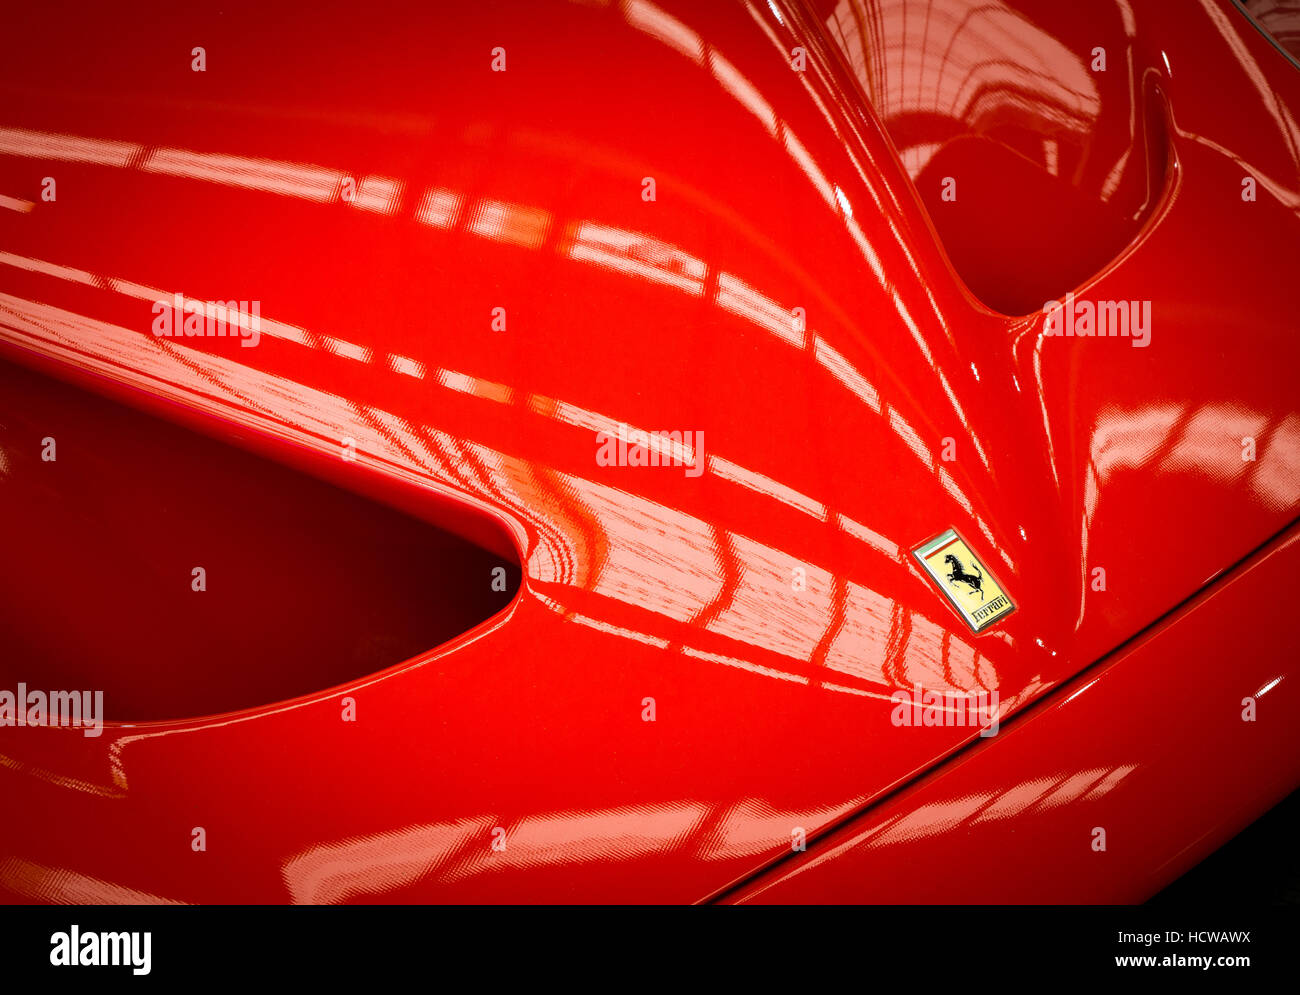 Bonnet Detail of a Ferrari F50 Supercar Stock Photo